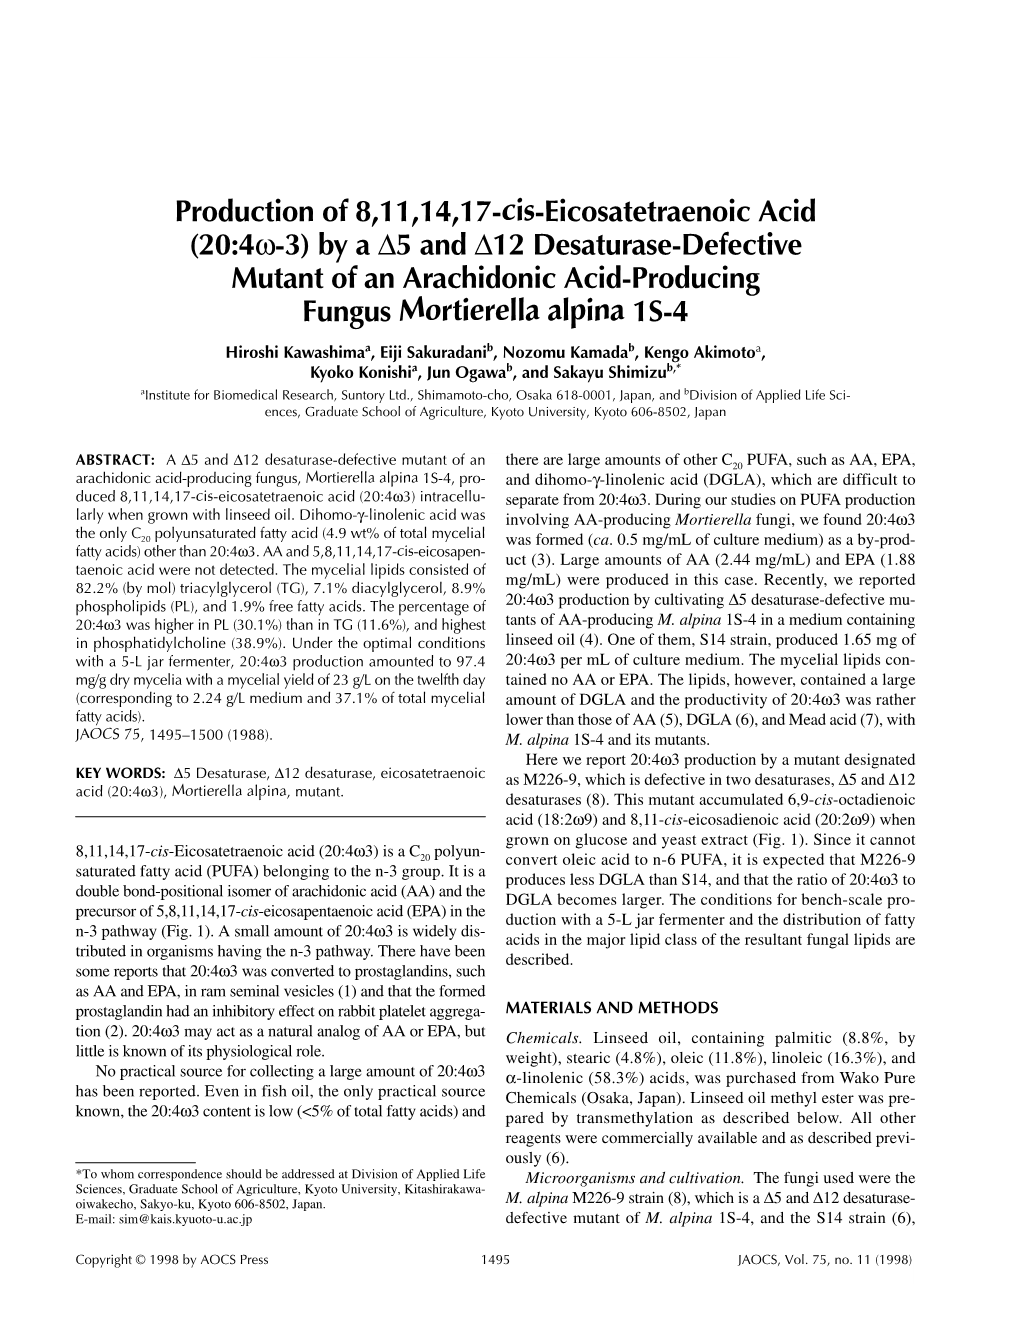 Production of 8,11,14,17-Cis-Eicosatetraenoic Acid